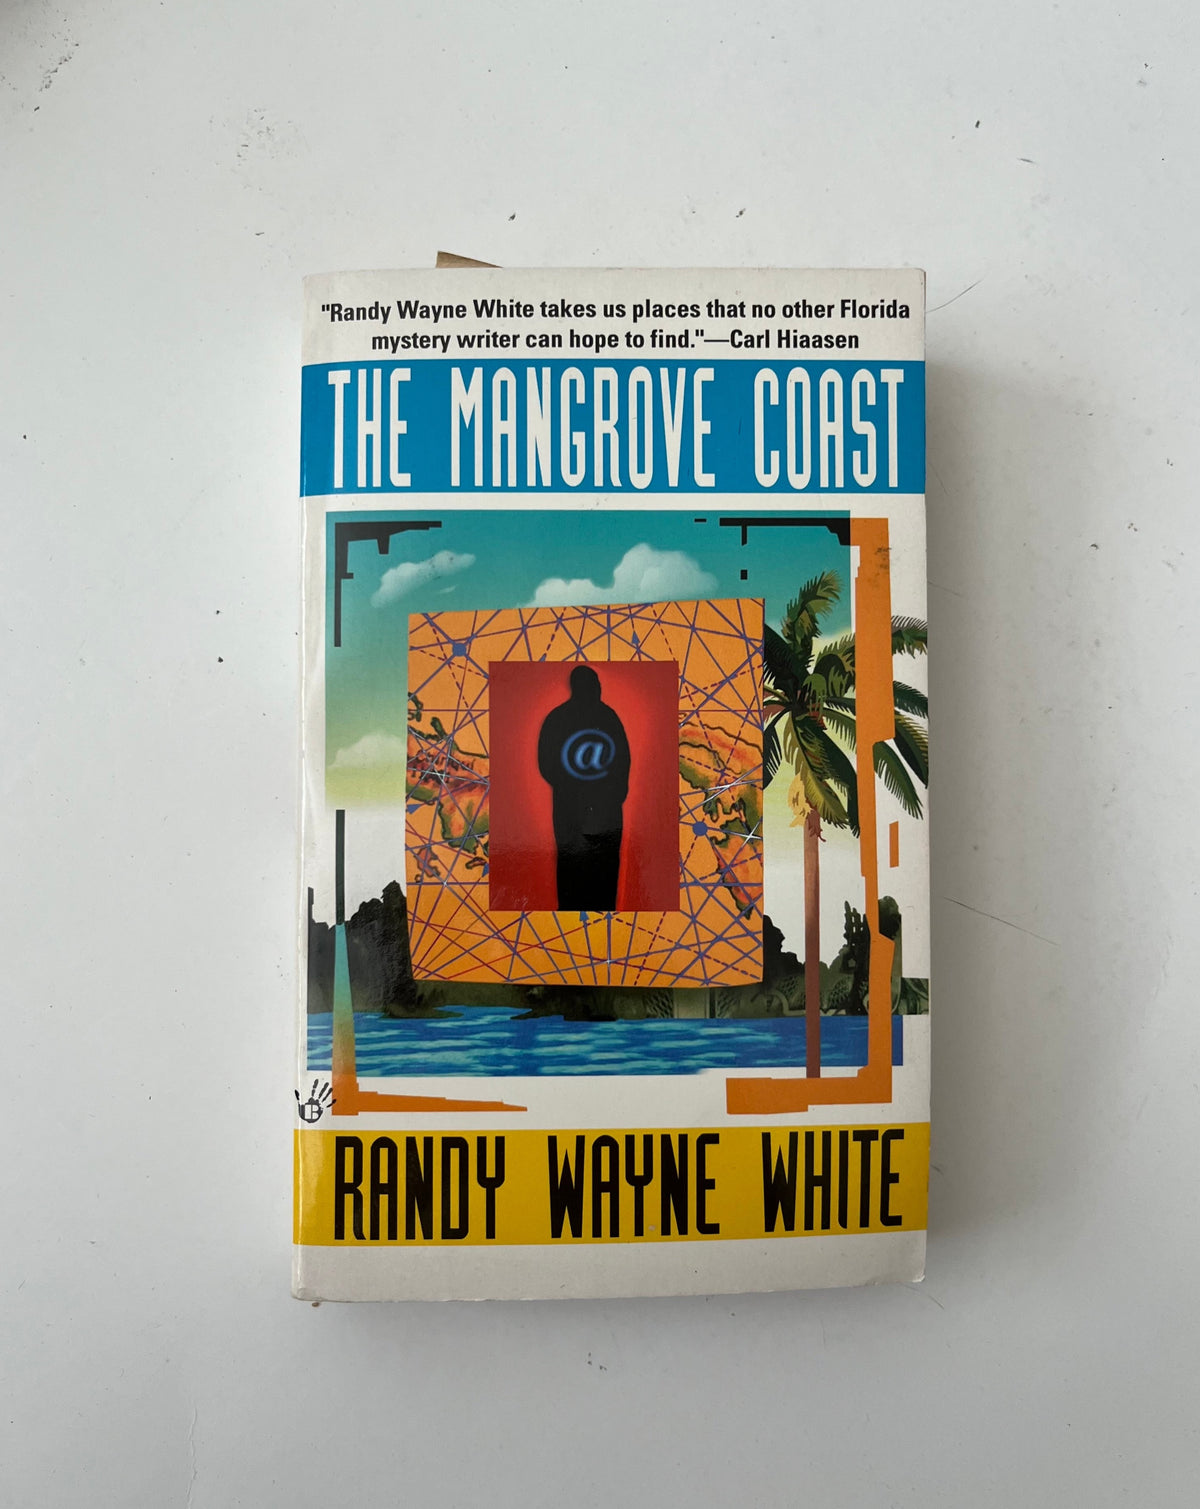 Donate: The Mangrove Coast by Randy Wayne White